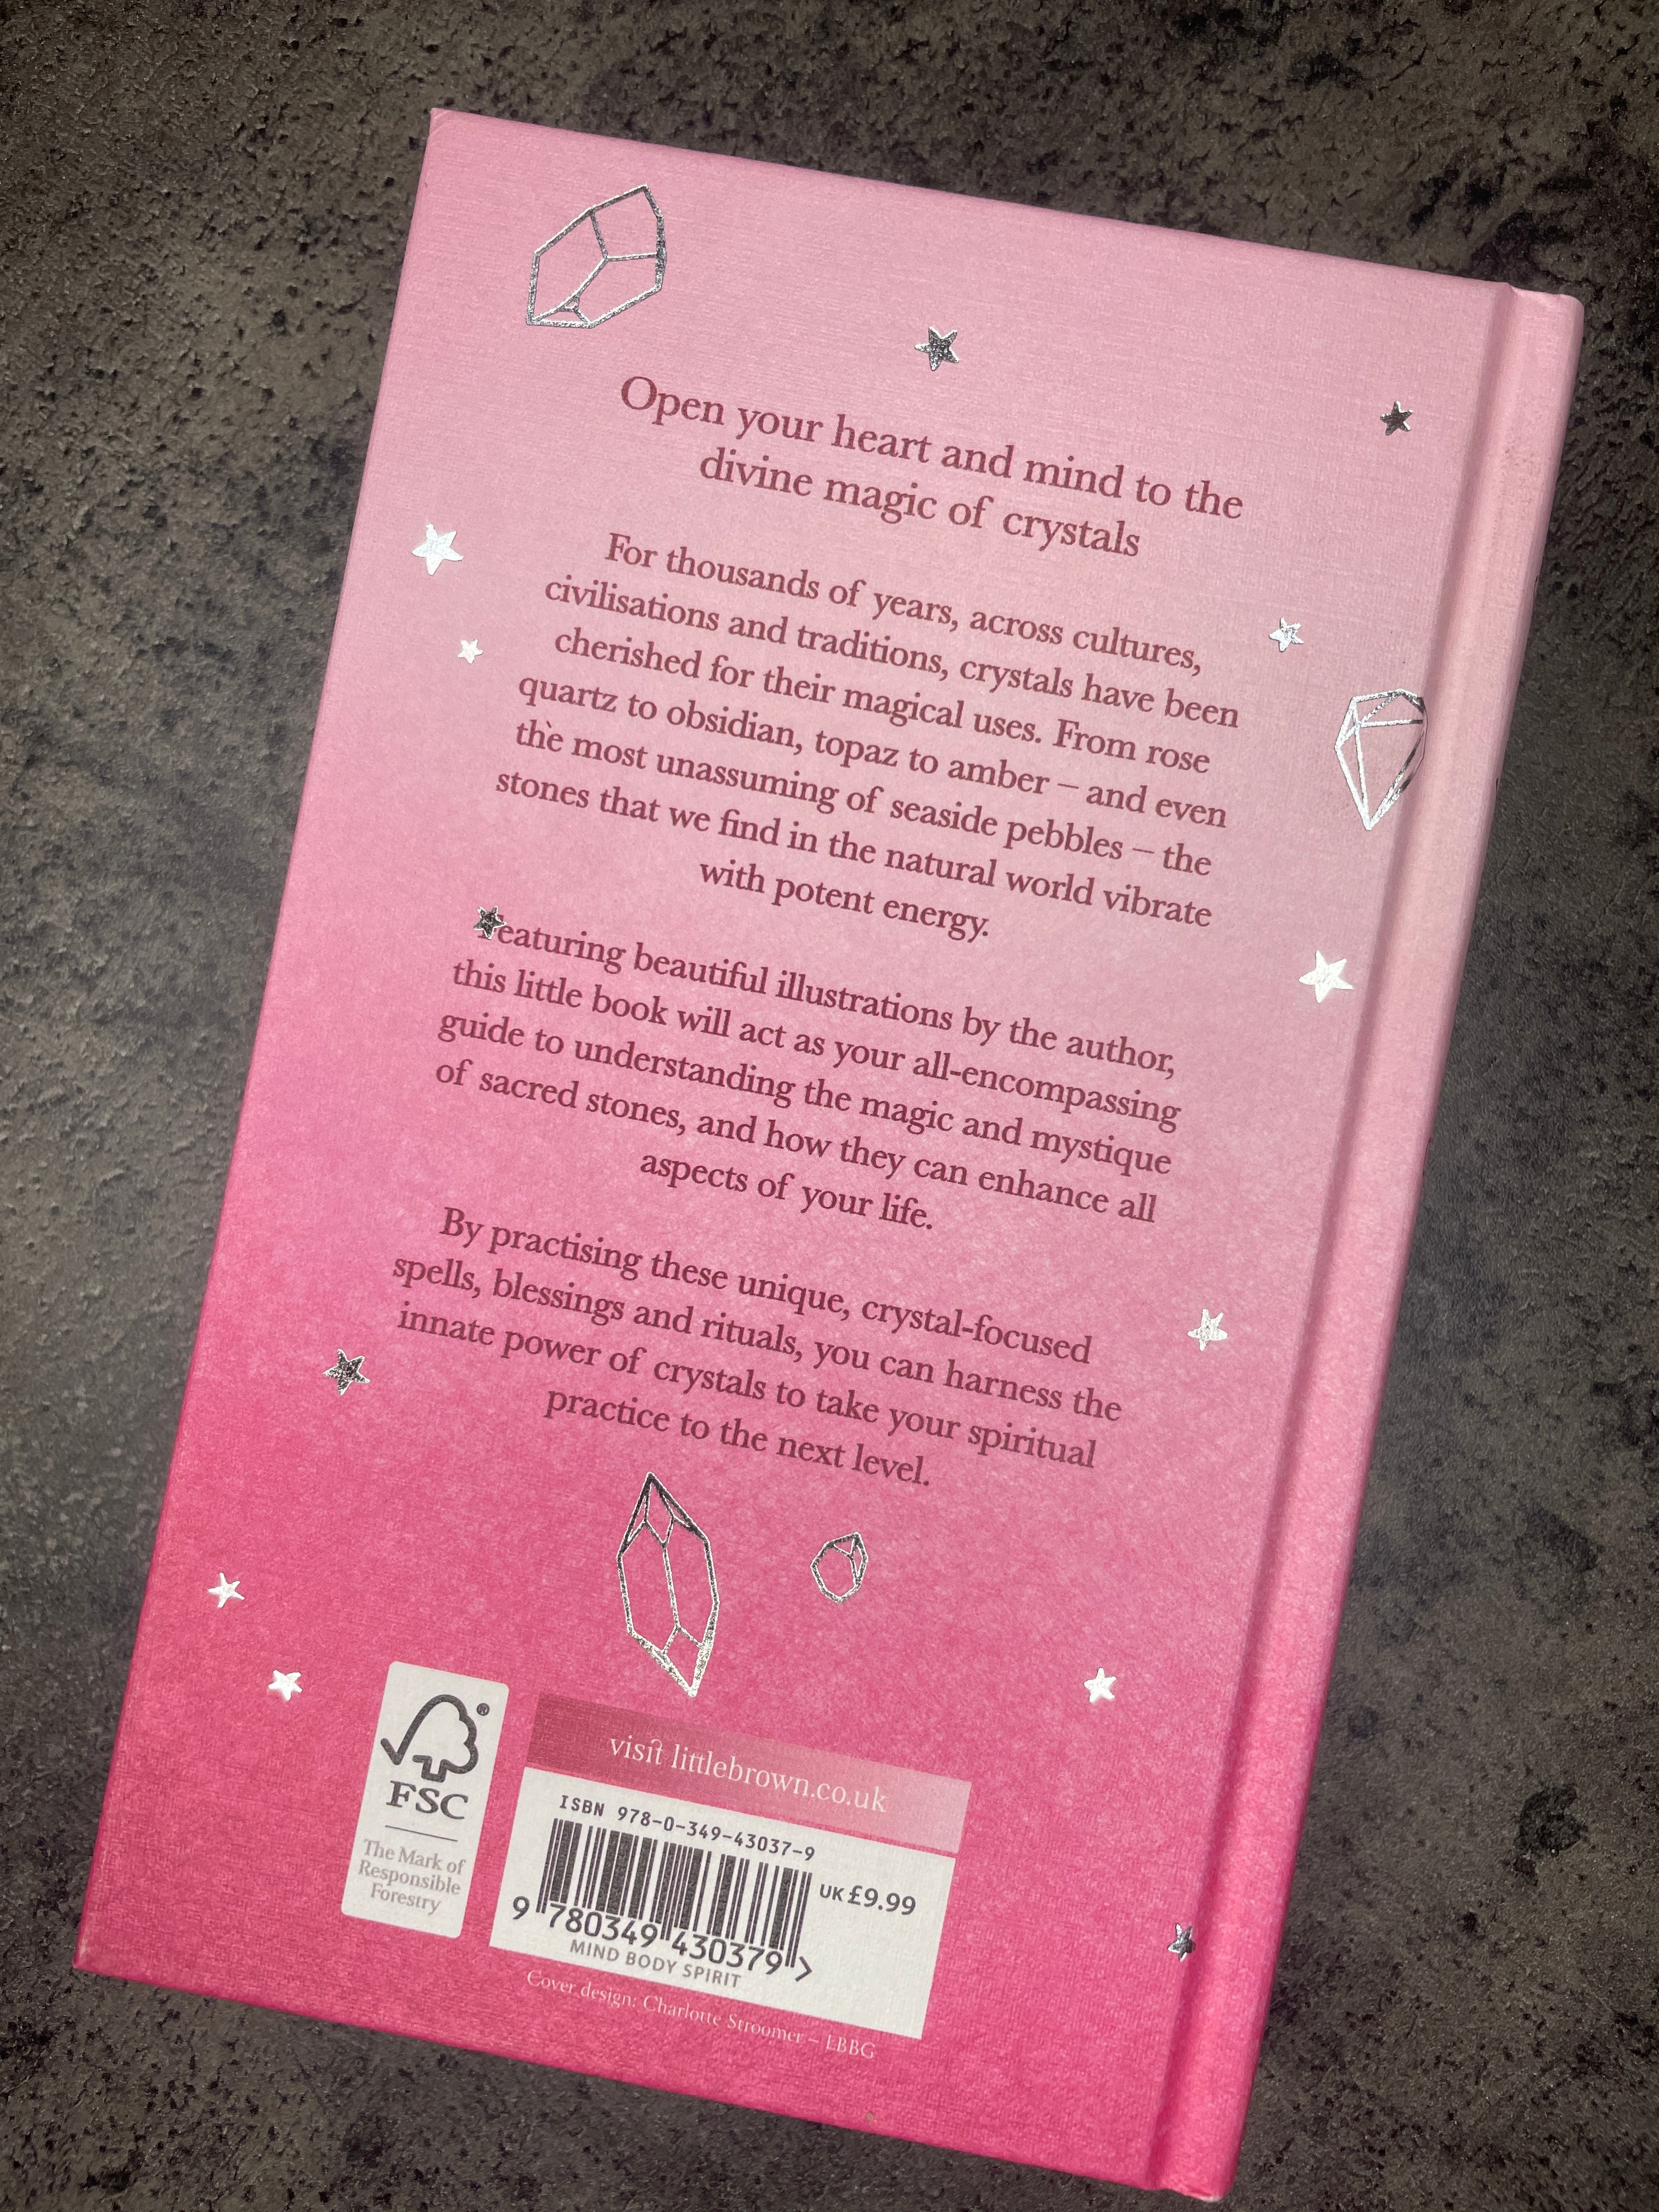 The Little Book of Crystal Magic, Sarah Bartlett